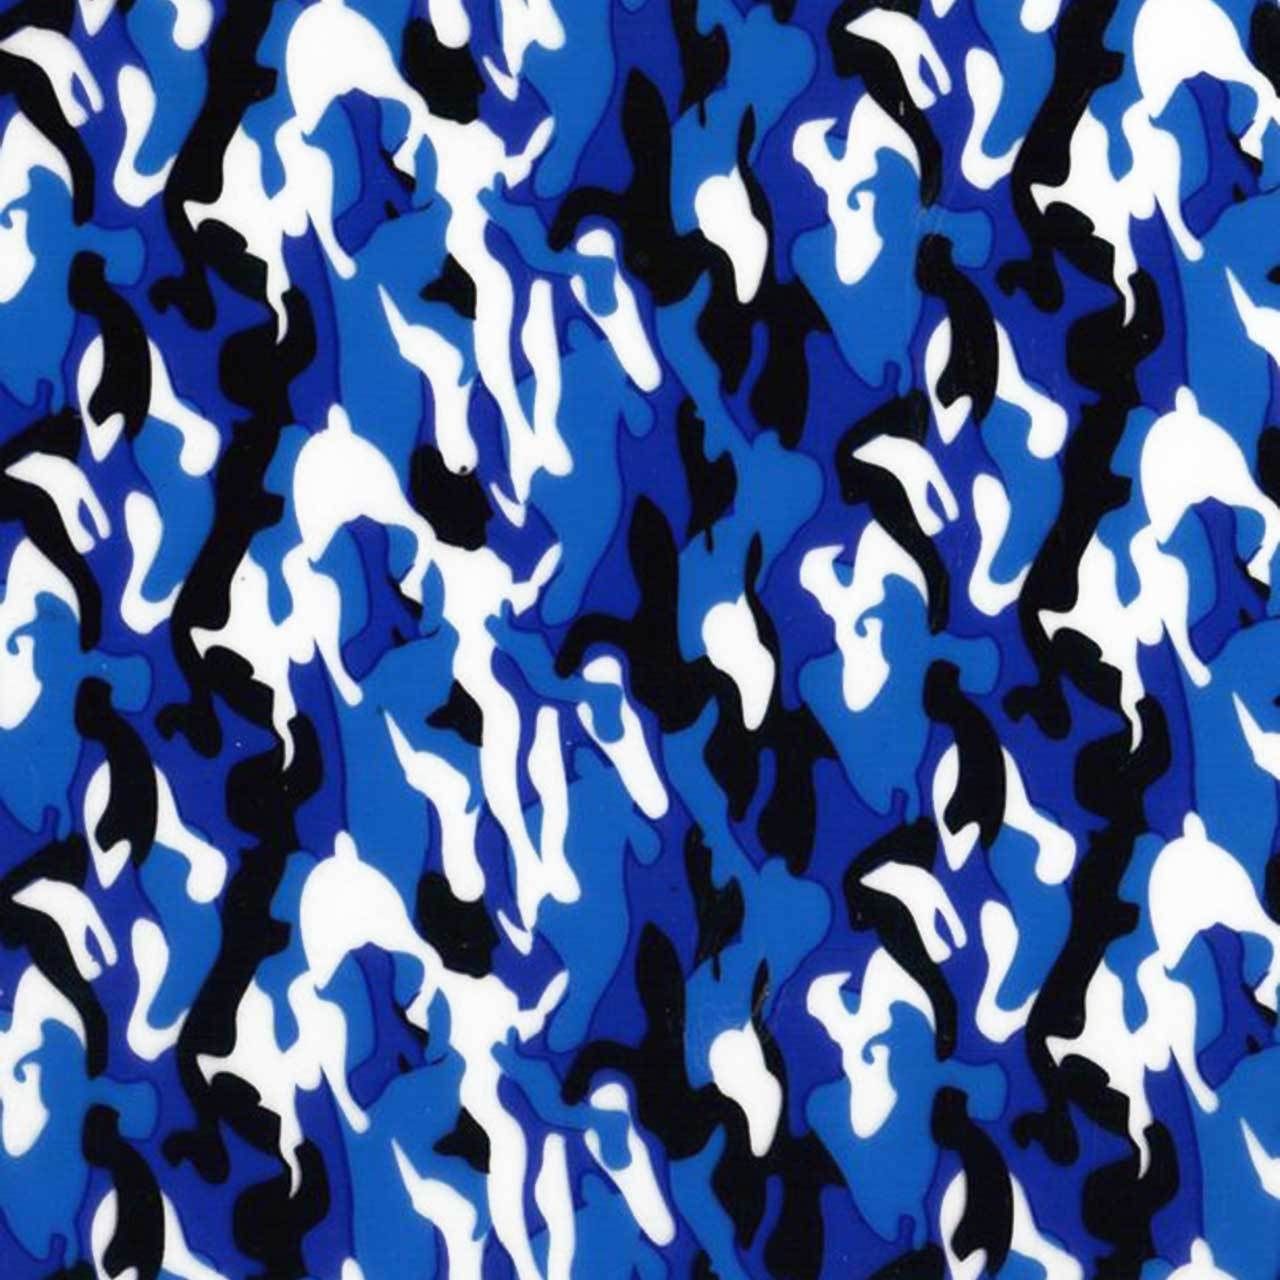 blue camo patterns wallpaper, Camouflage wallpaper, Live wallpaper